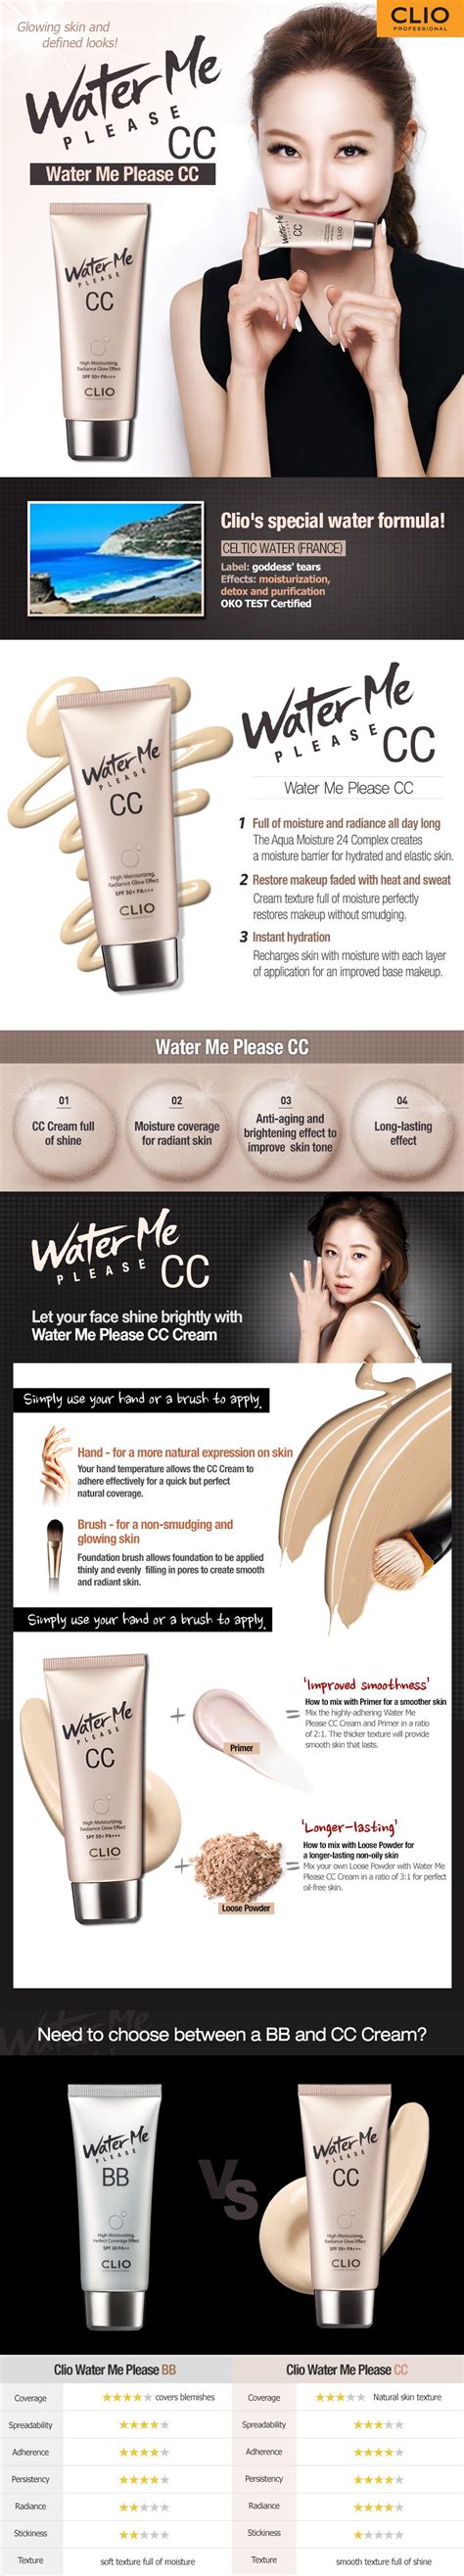 Clio Water Me Please CC Cream | Galaxy makeup, Korean ...